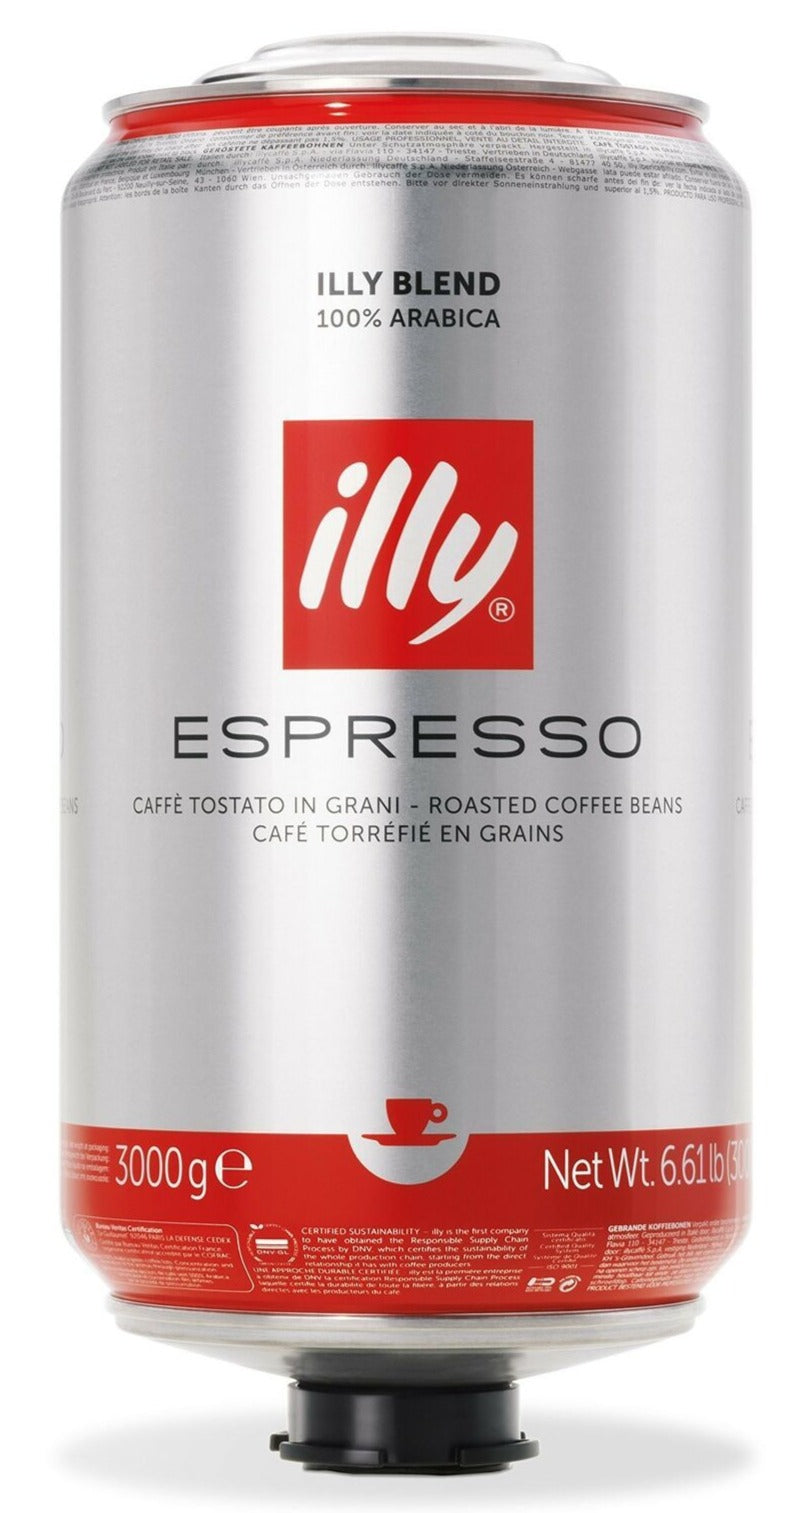 Illy Espresso, 100% Arabica Coffee, Whole Beans, Medium Roasted